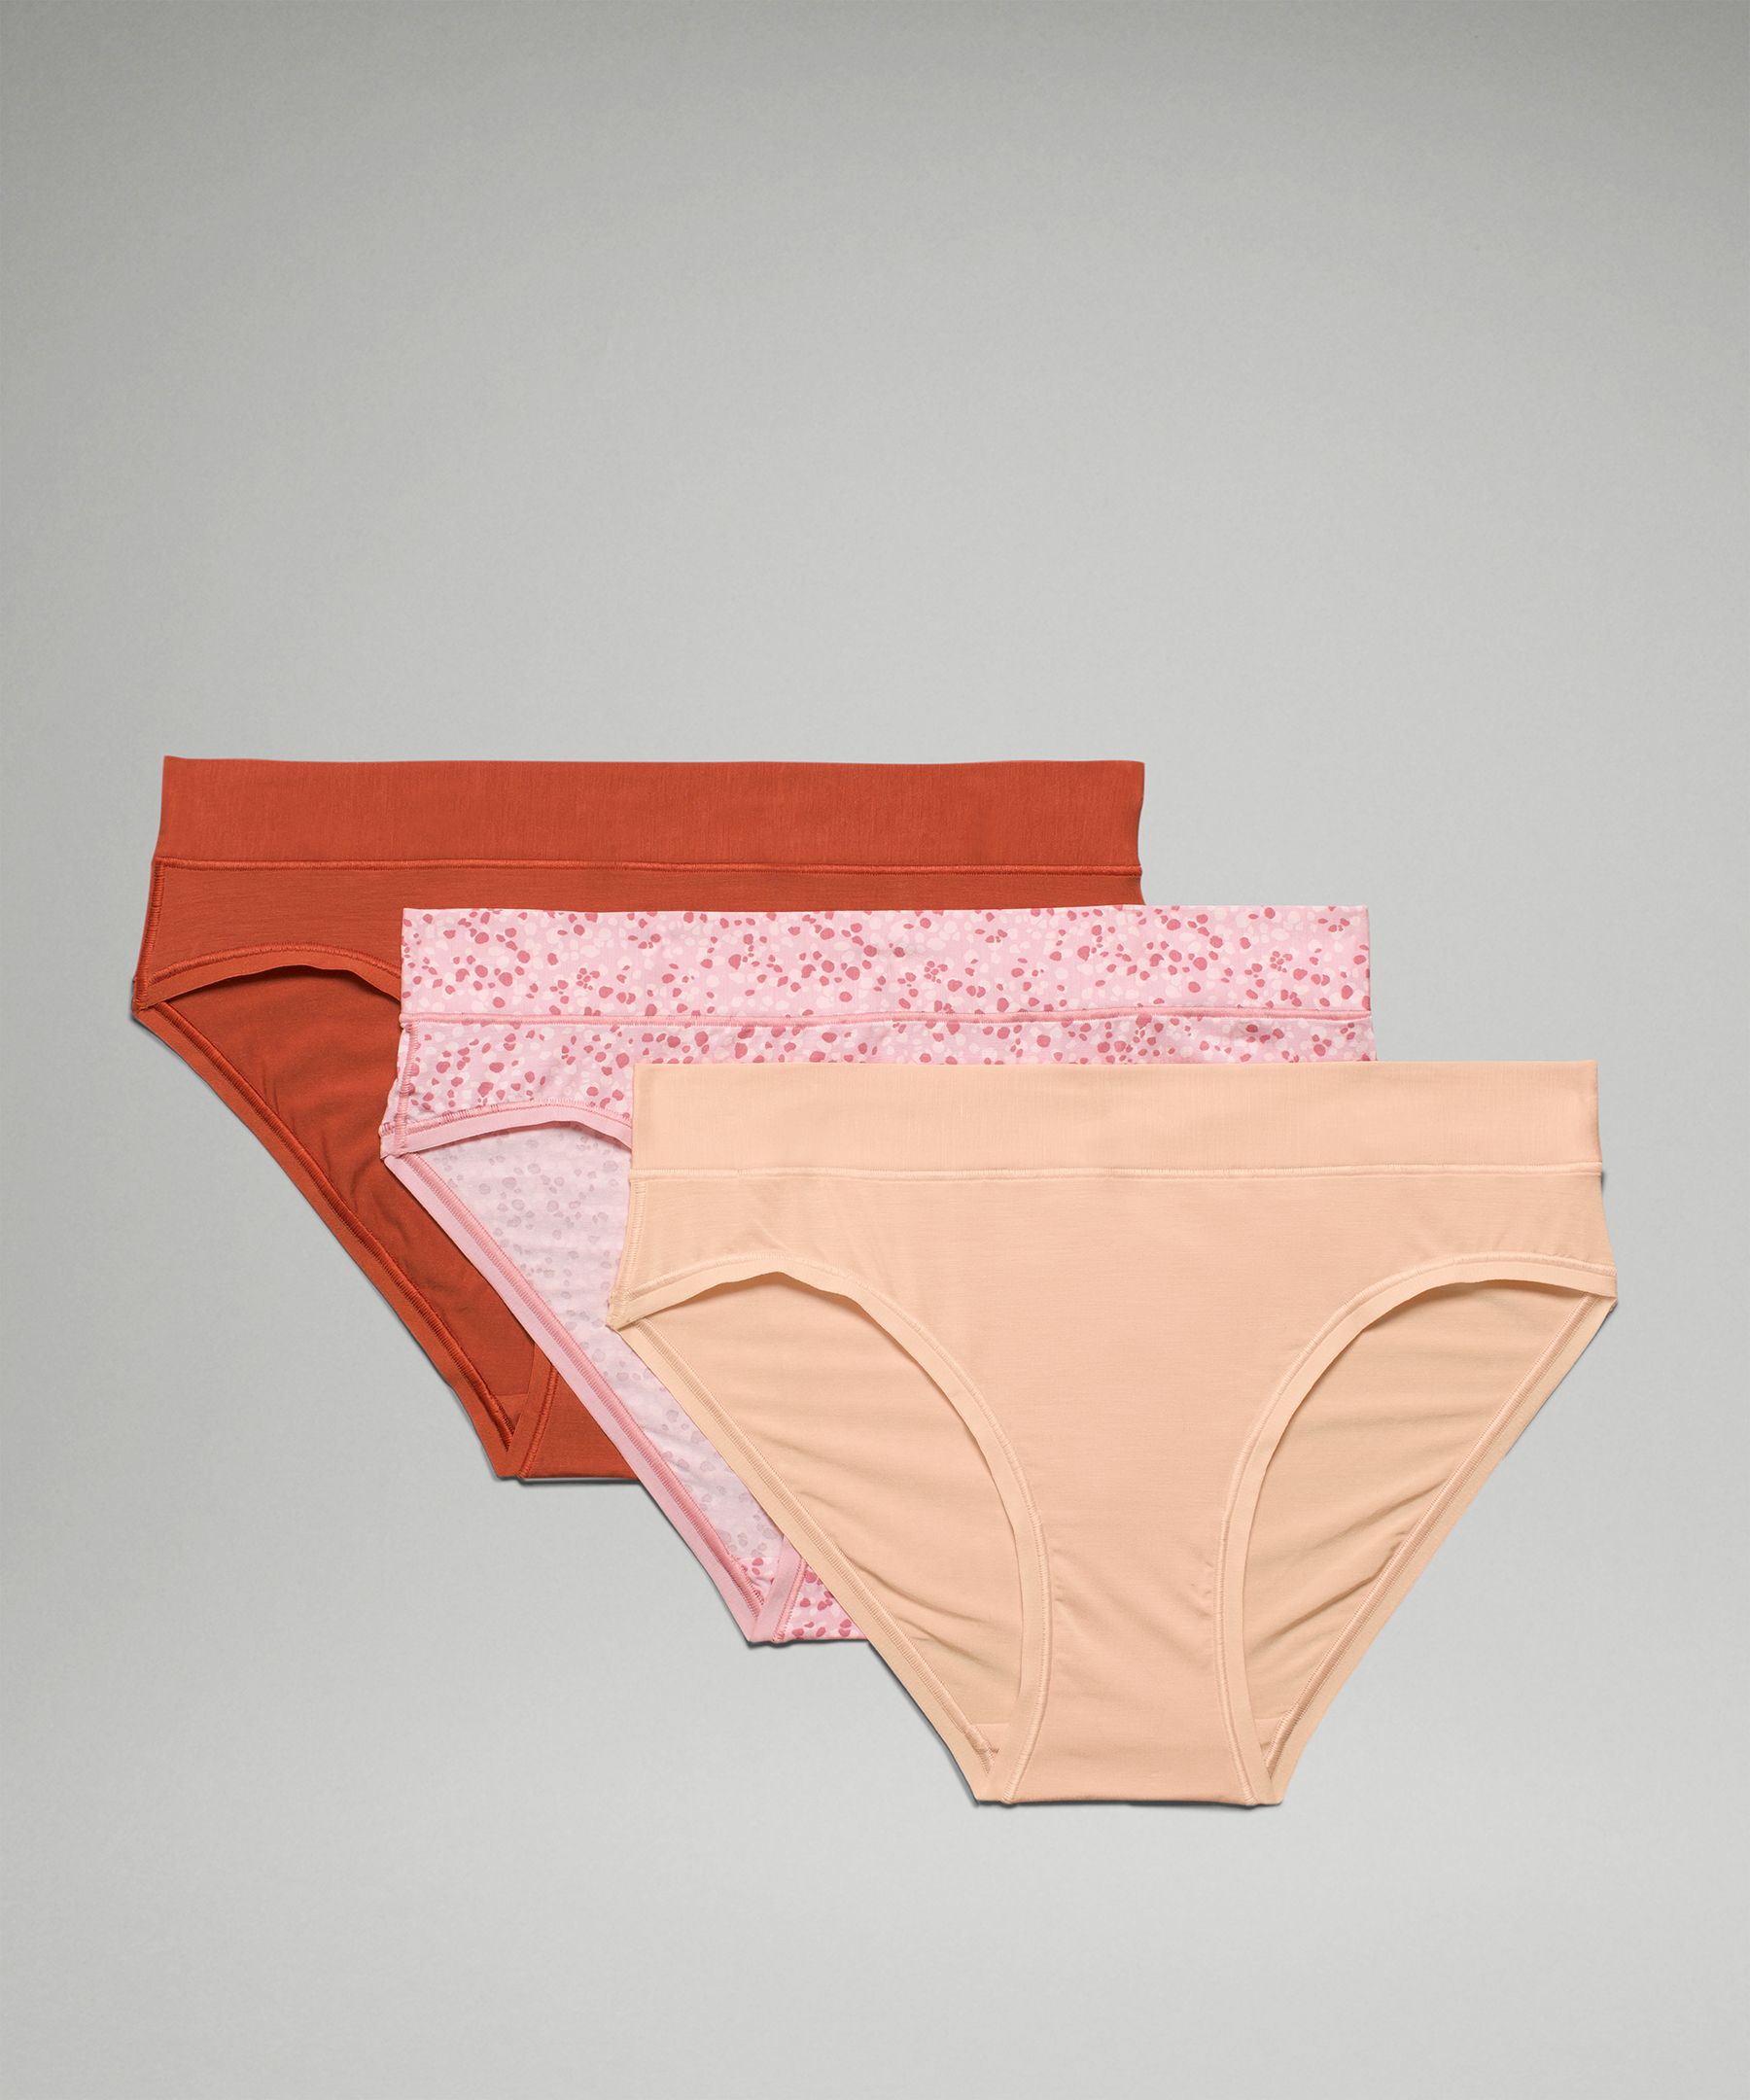 Lululemon Underease Mid-rise Bikini Underwear 3 Pack In Aztec Brick/bleached Apricot/rosebud Pink